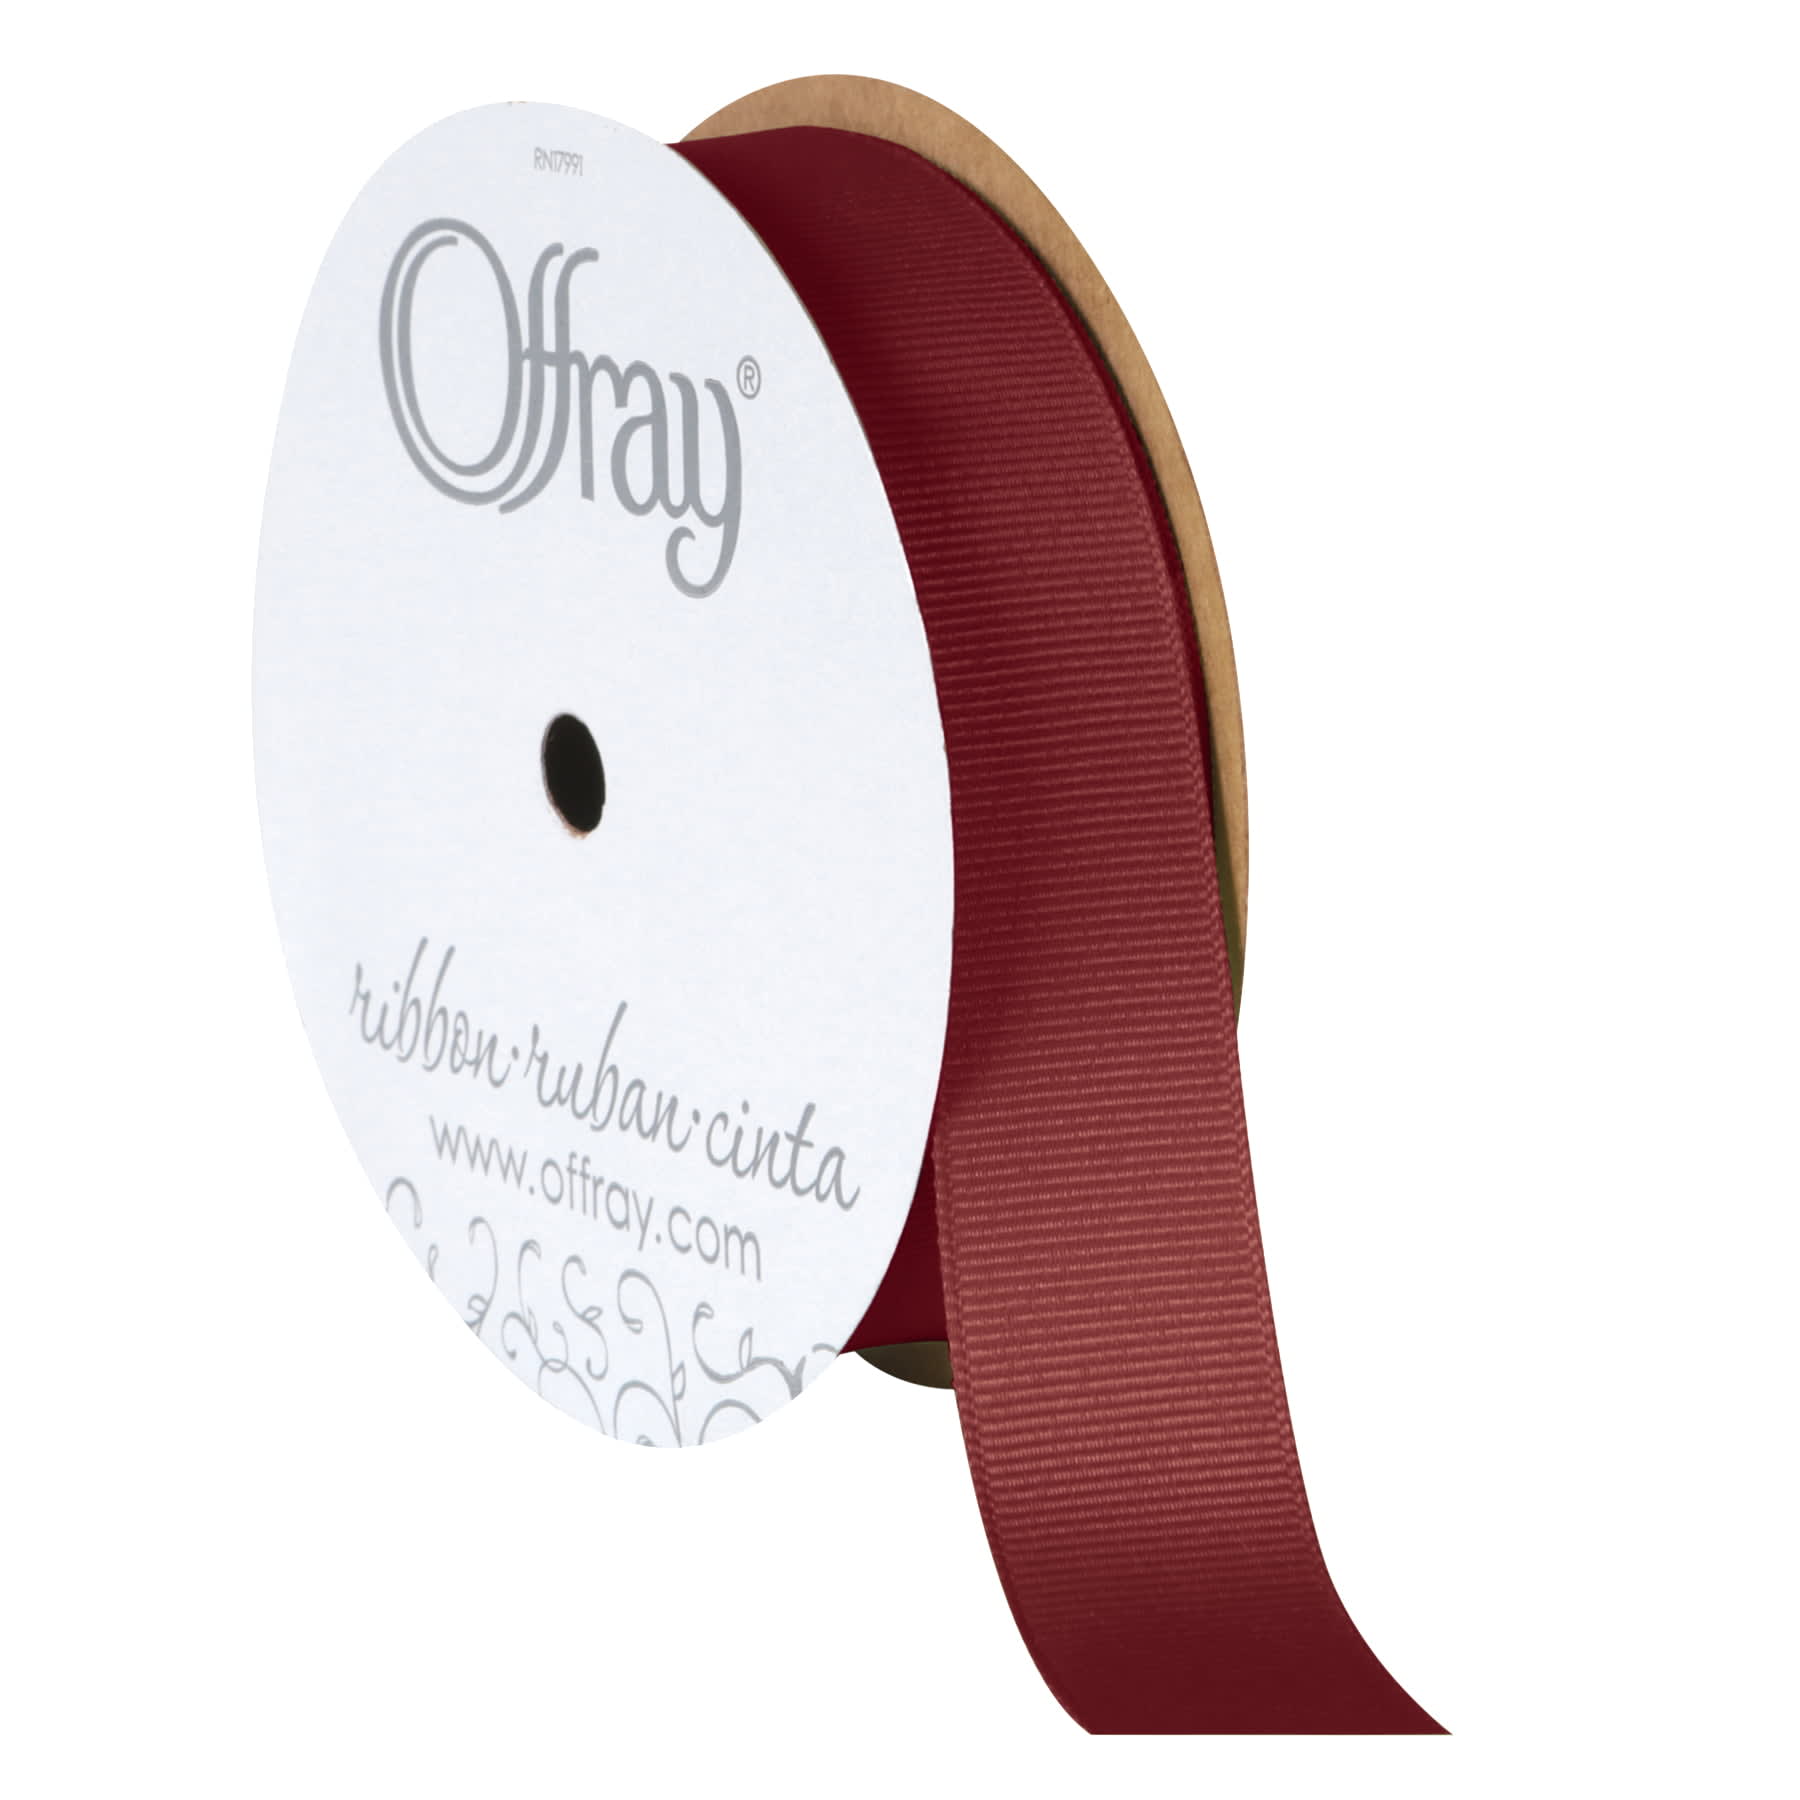 Offray Ribbon, Metallic Gold 1 1/2 inch Wired Edge Metallic Ribbon